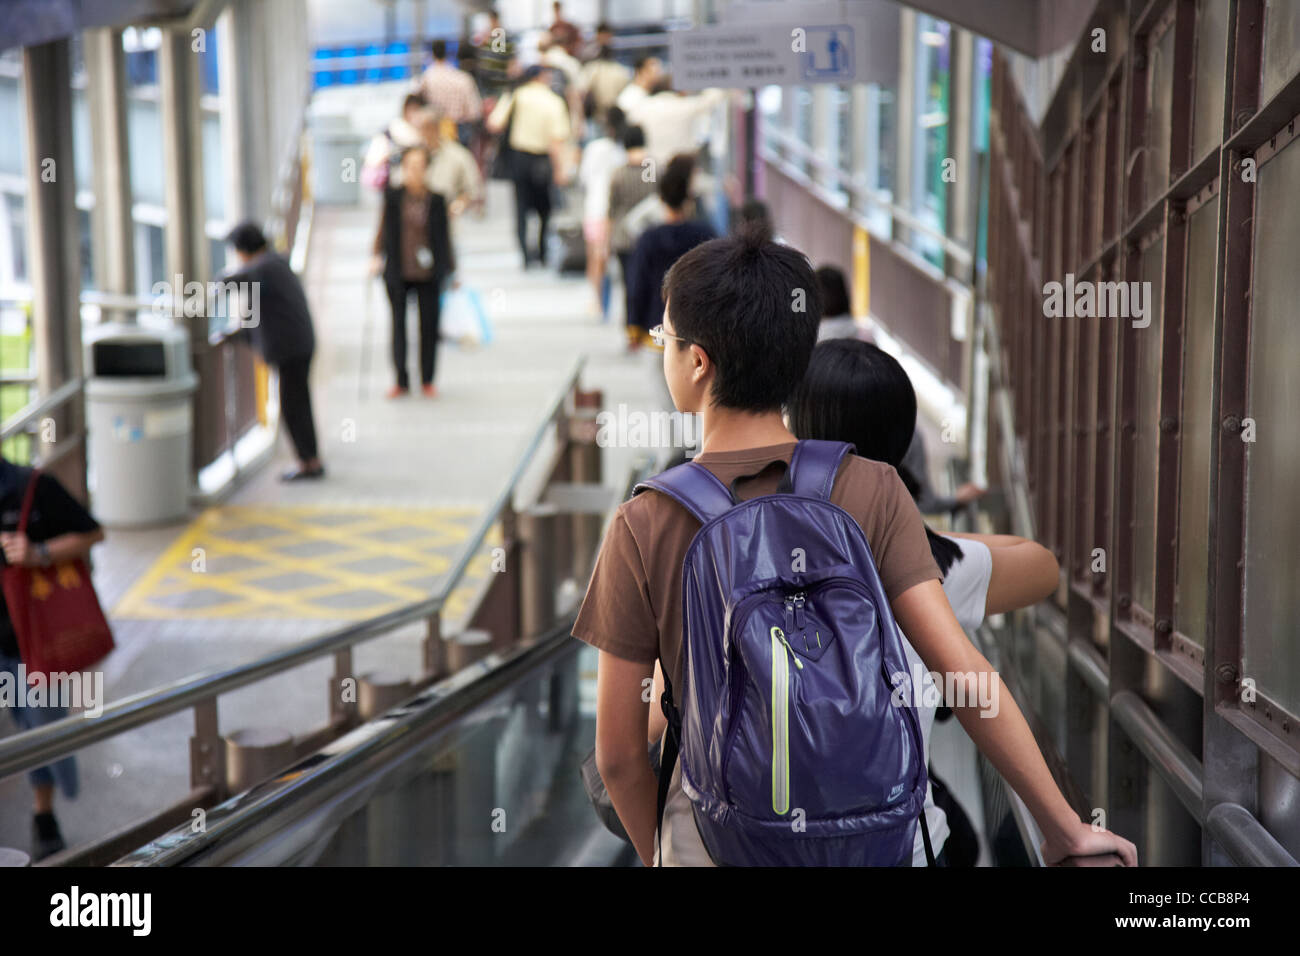 Menschen auf der Mitte Ebenen Rolltreppe System Hongkong Sonderverwaltungsregion Hongkong China Asien Stockfoto